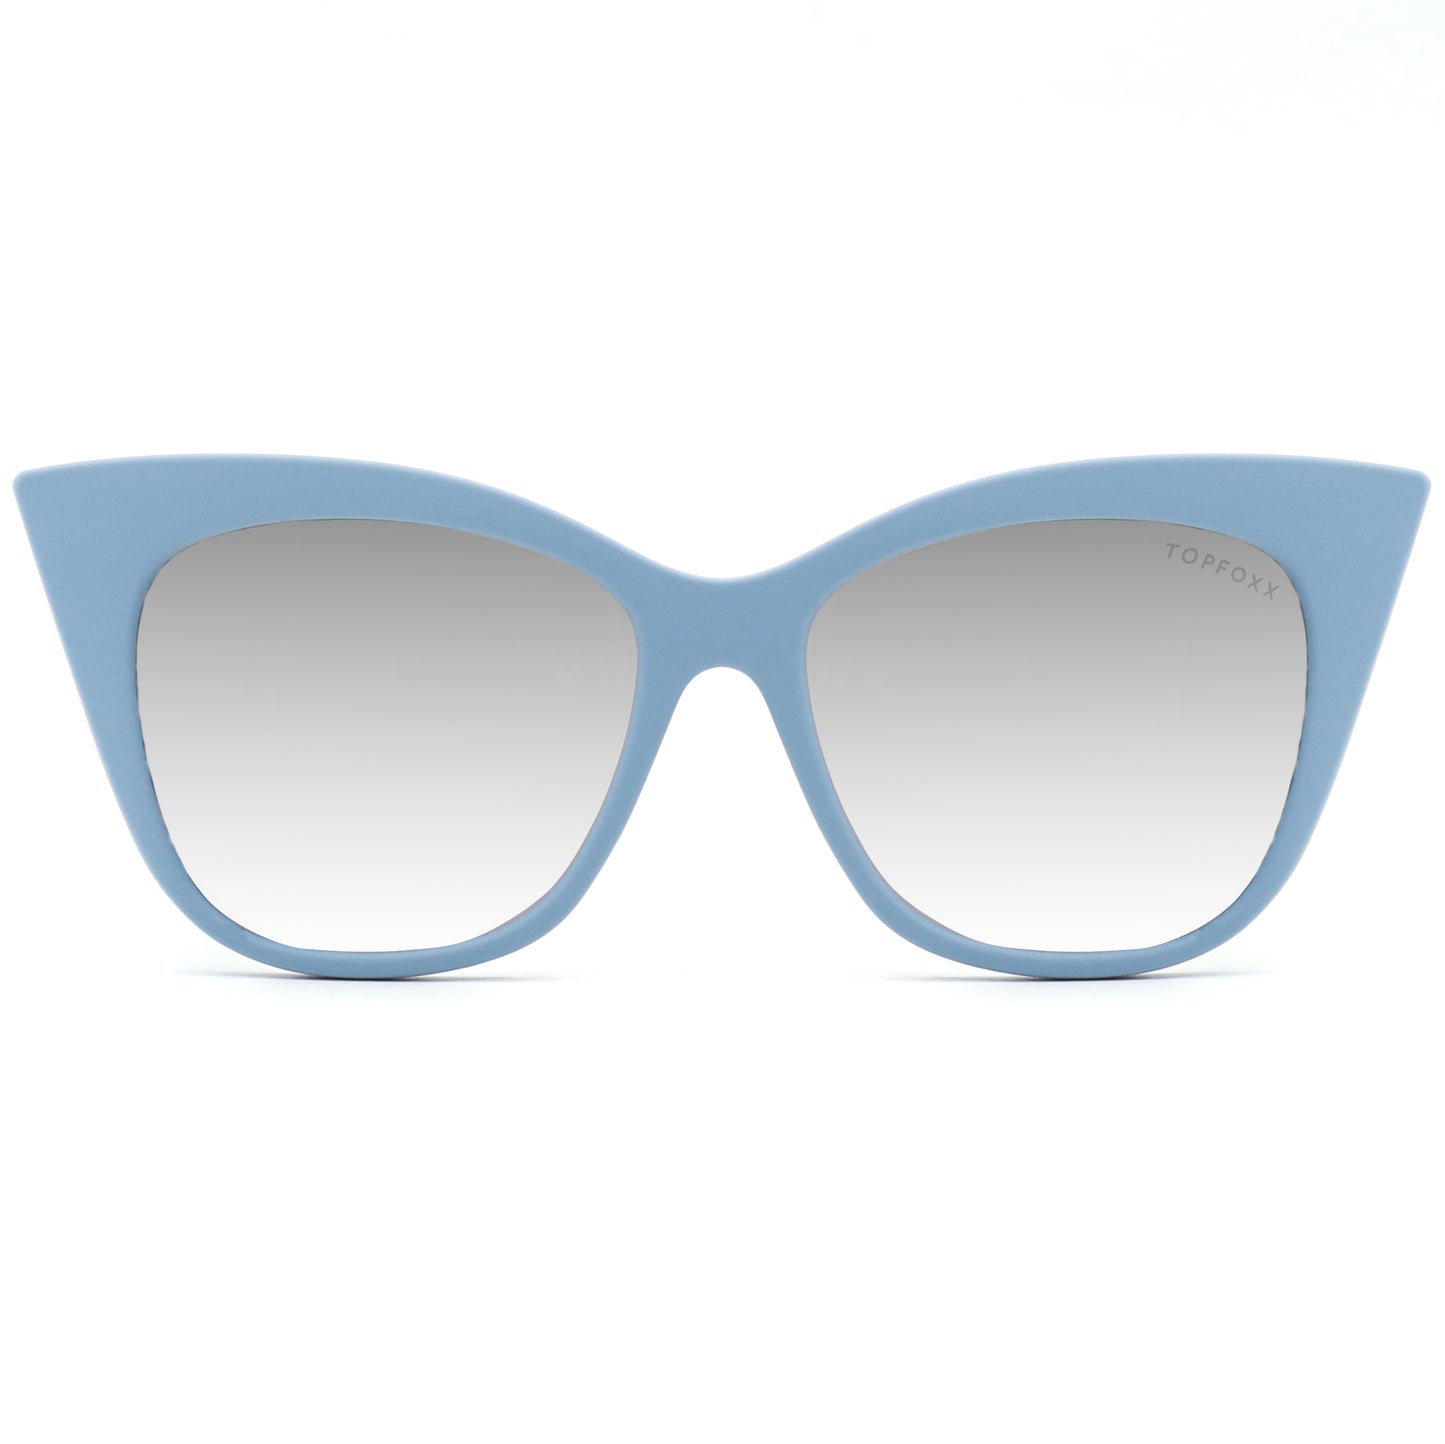 TopFoxx - Venice - Blue Silver Cat Eye Oversized Sunglasses for women - Model 